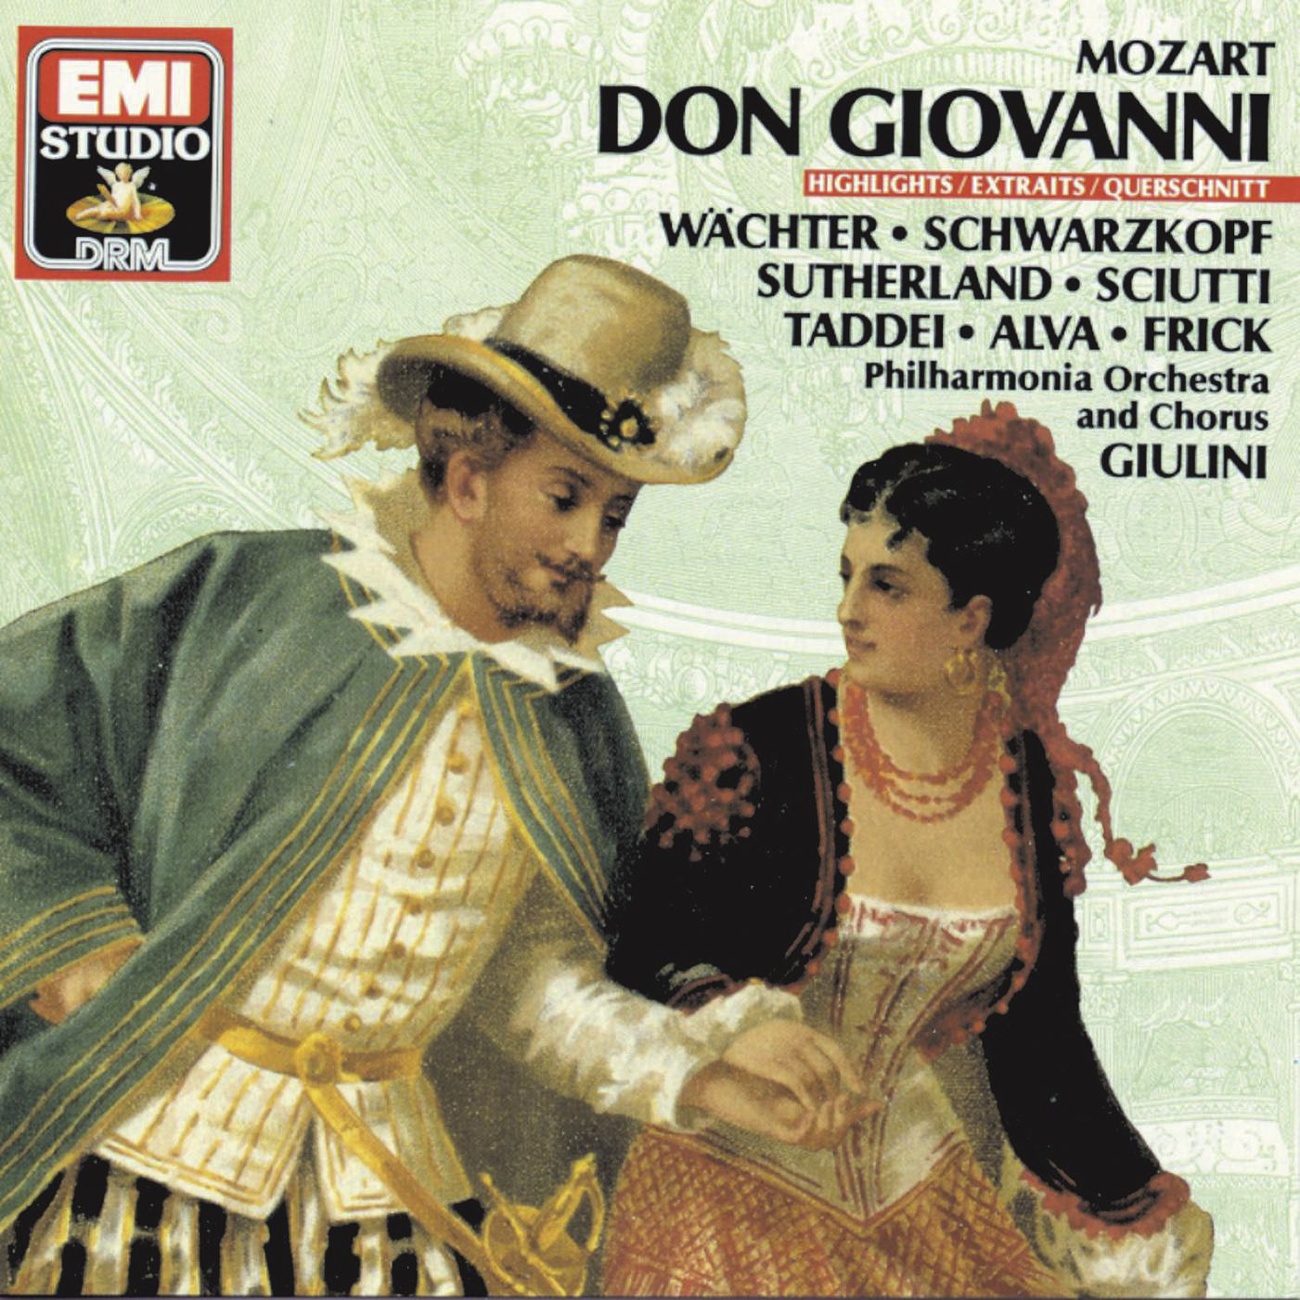 Don Giovanni (1987 Digital Remaster), Act 1: Batti, batti, o bel Masetto (Zerlina)